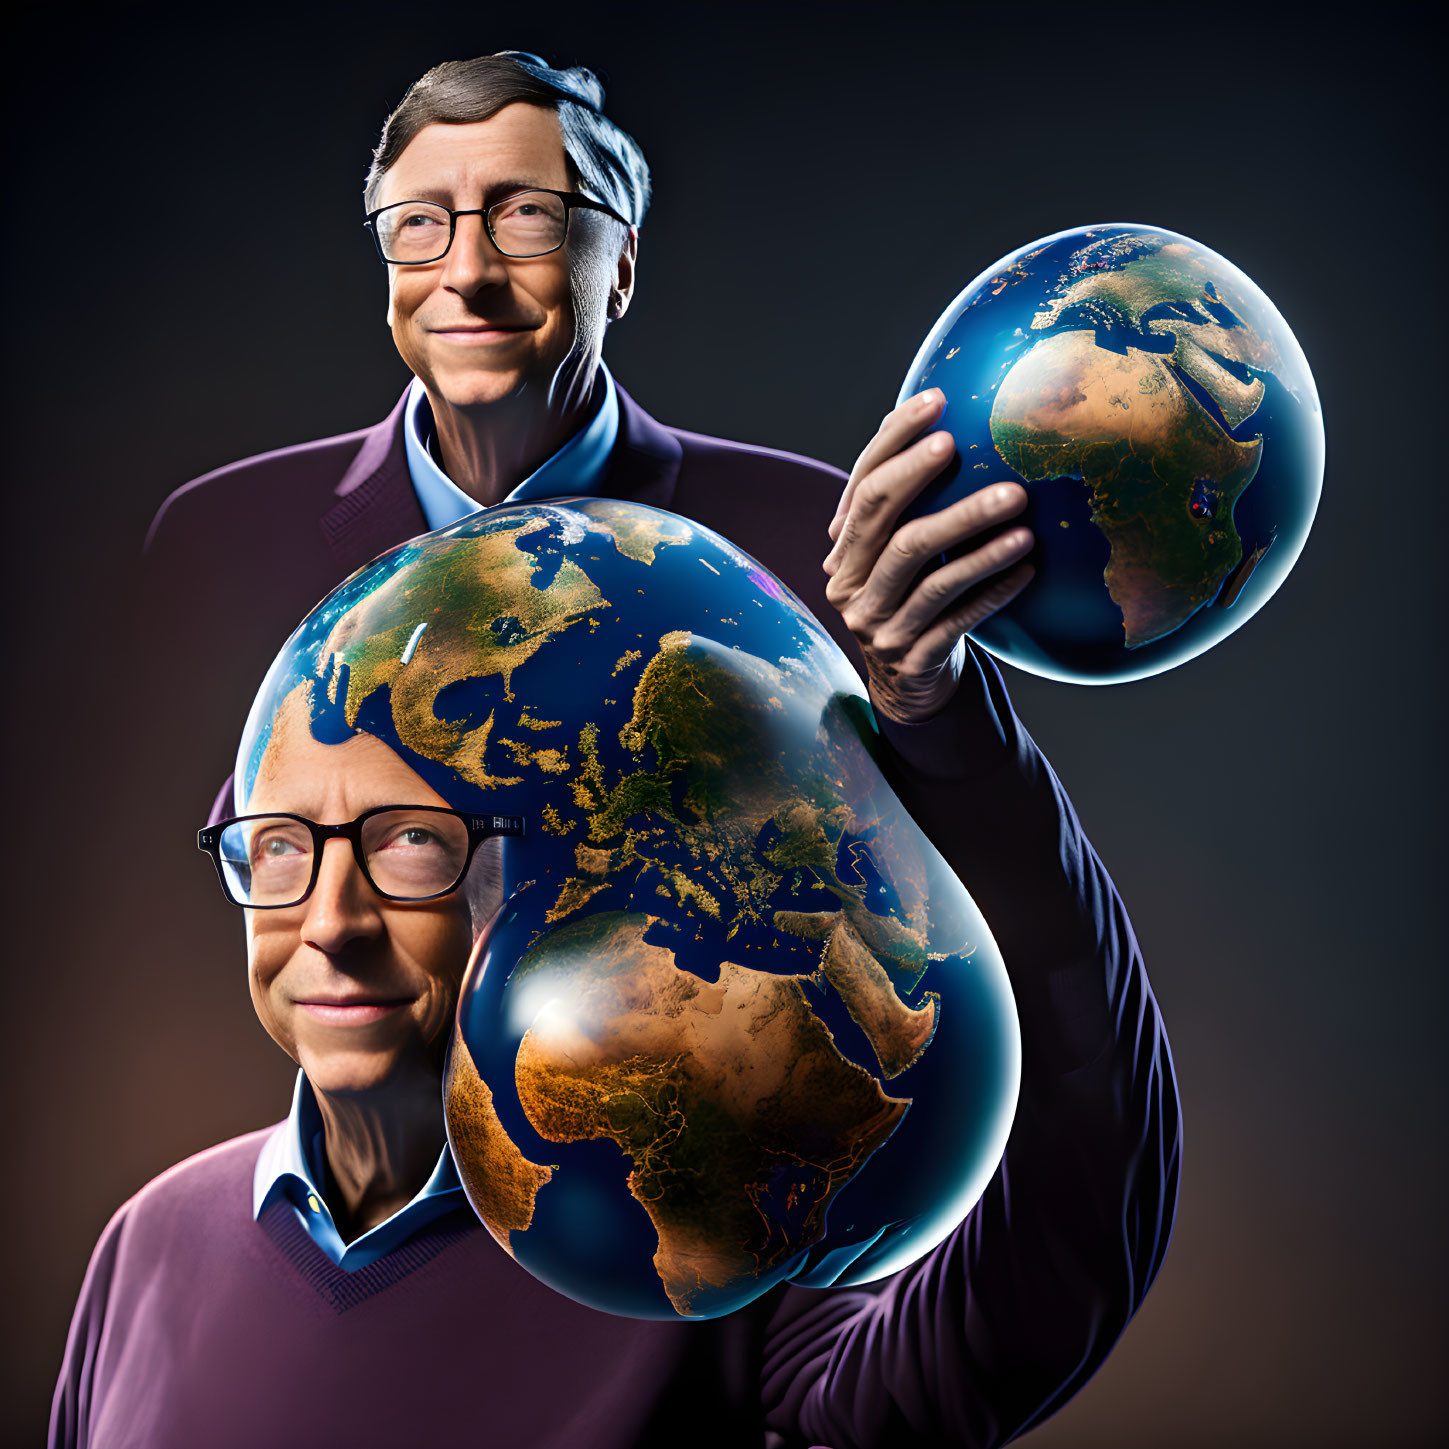 Bill Gates phenomenon